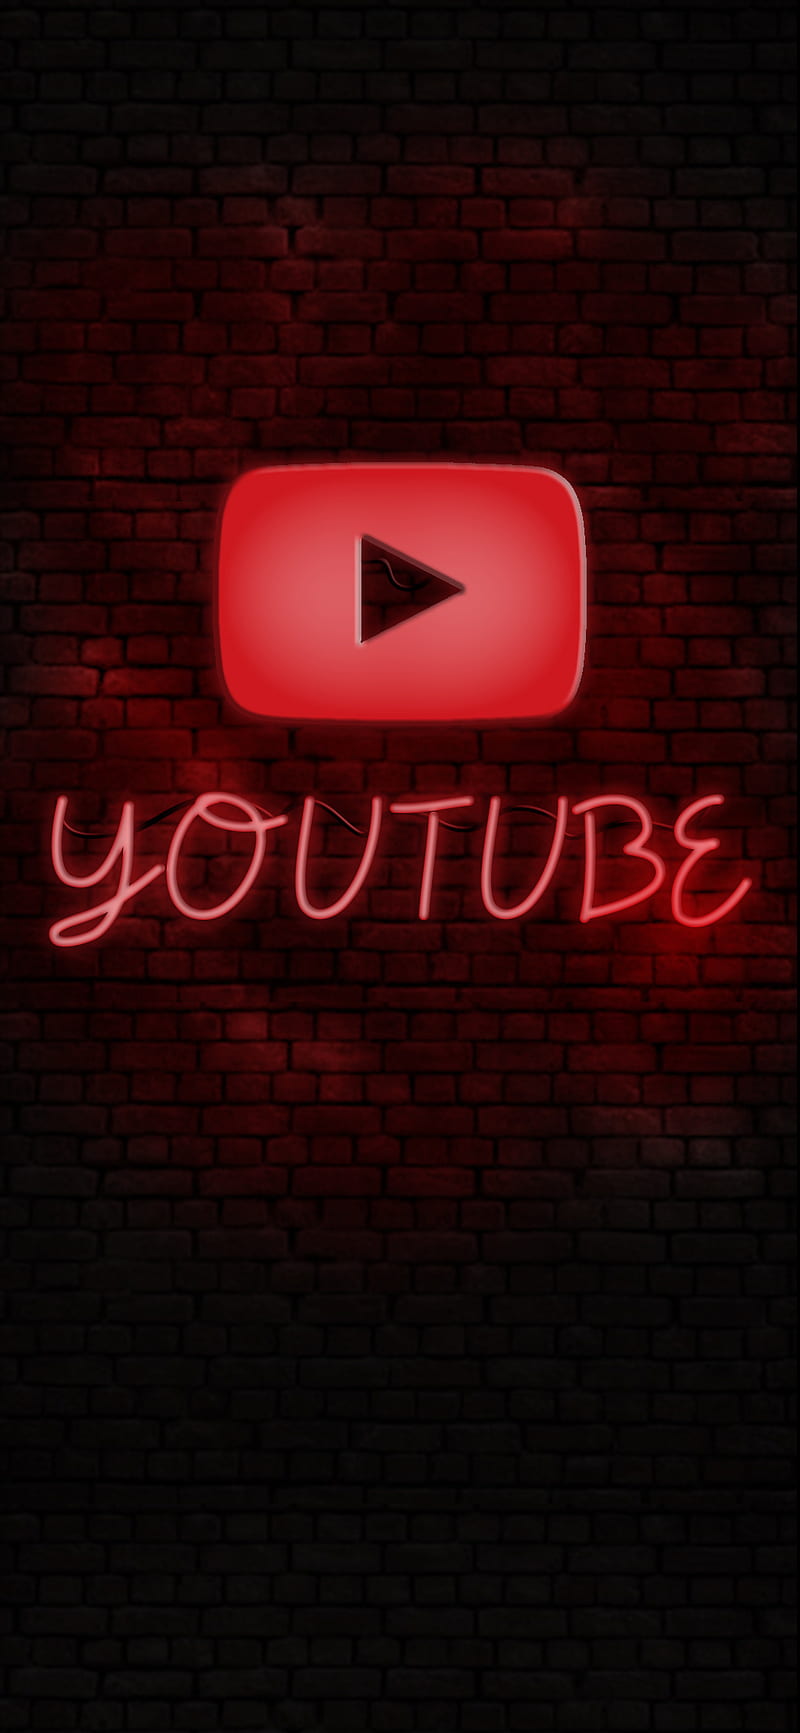 youtube wallpaper